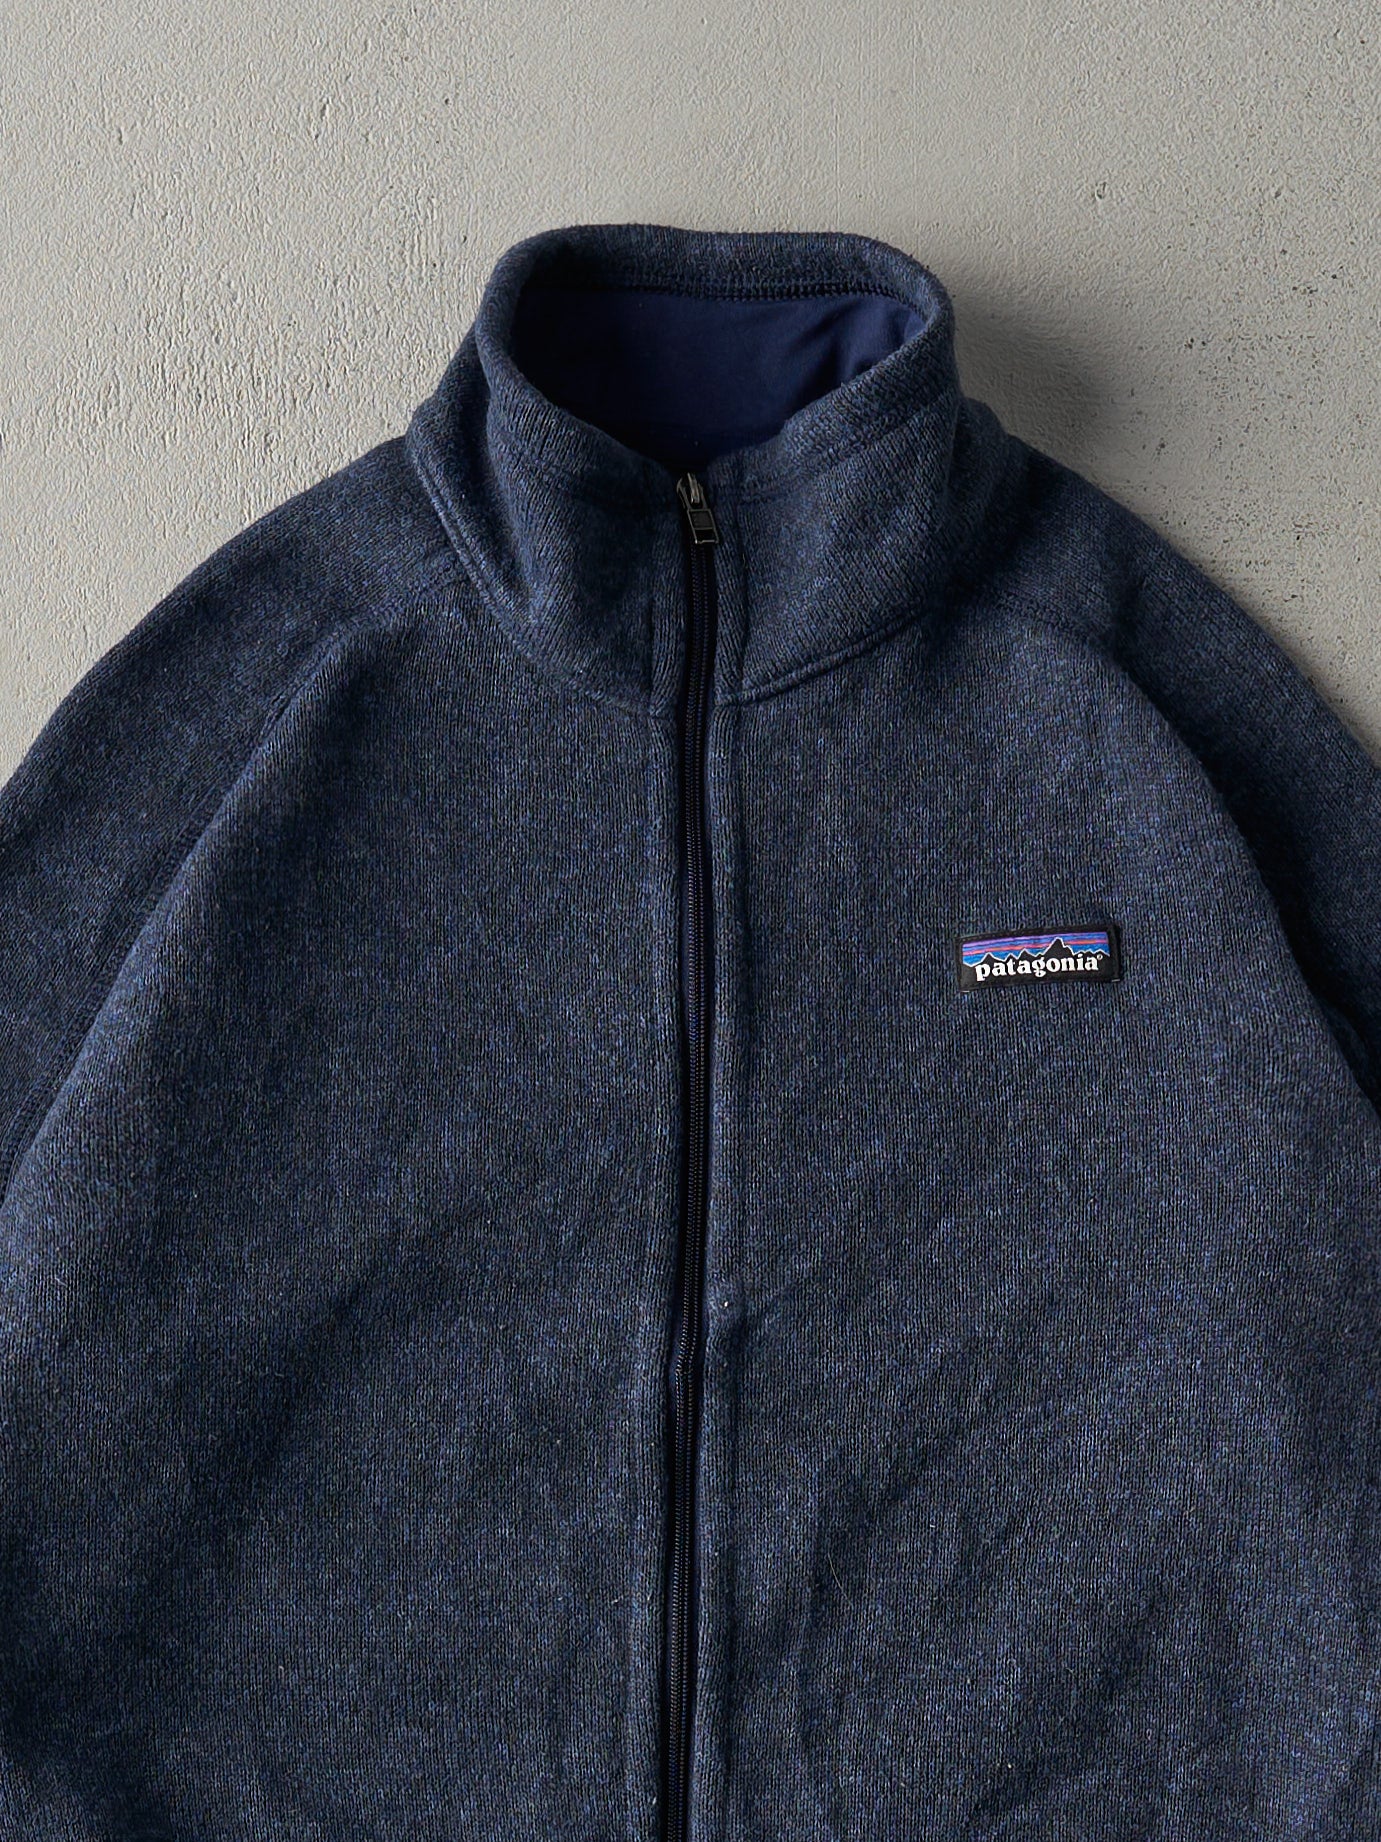 Vintage 90s Navy Blue Patagonia Zip Up Polar Fleece Sweater (M)